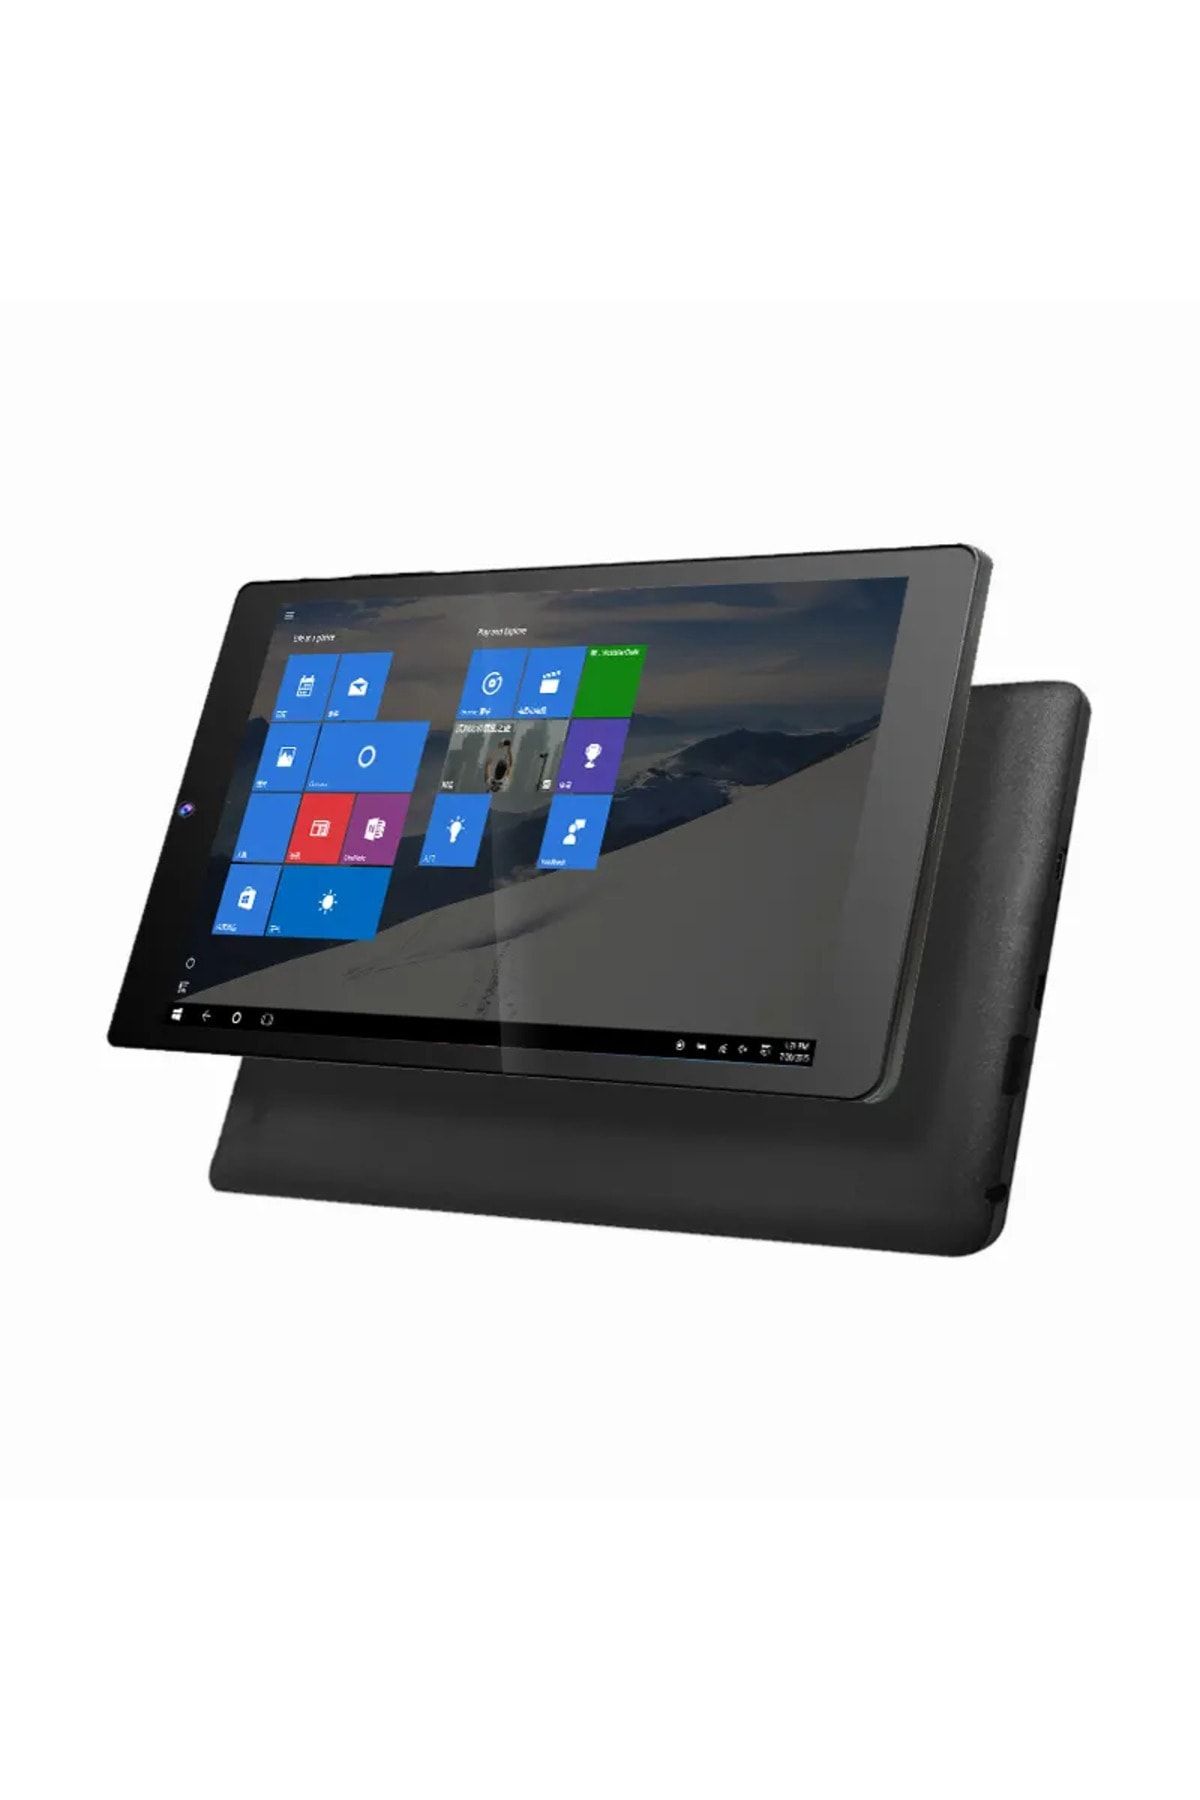 FOSILTECH Mini Windows 10 Tablet Pc - 8 Inç Ekran, 2gb Ram, 32gb Rom